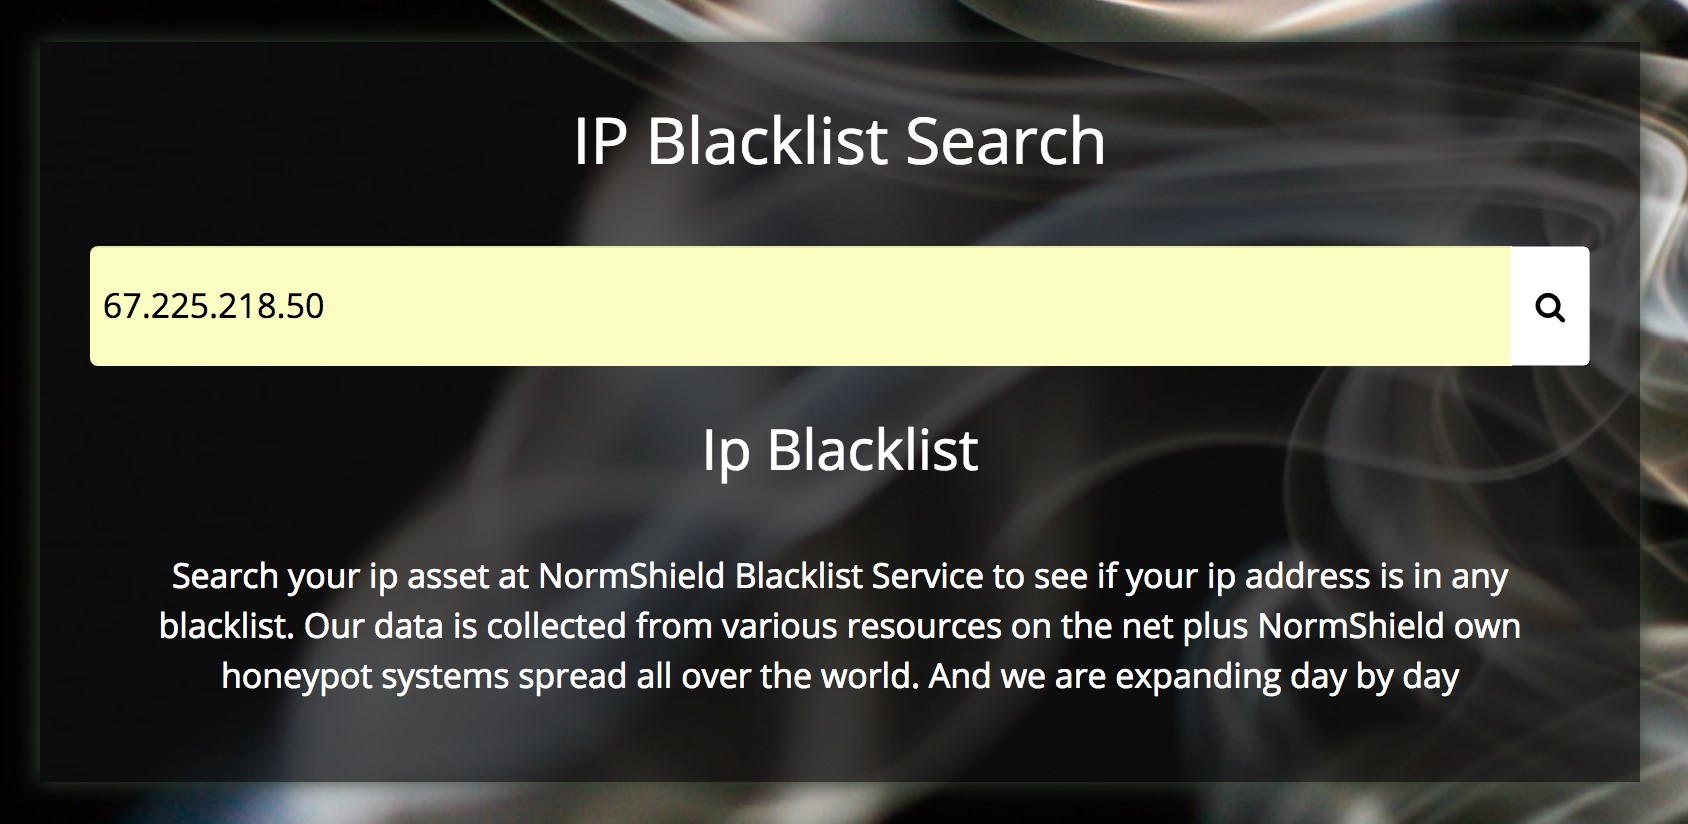 does the blacklist script website allow ip